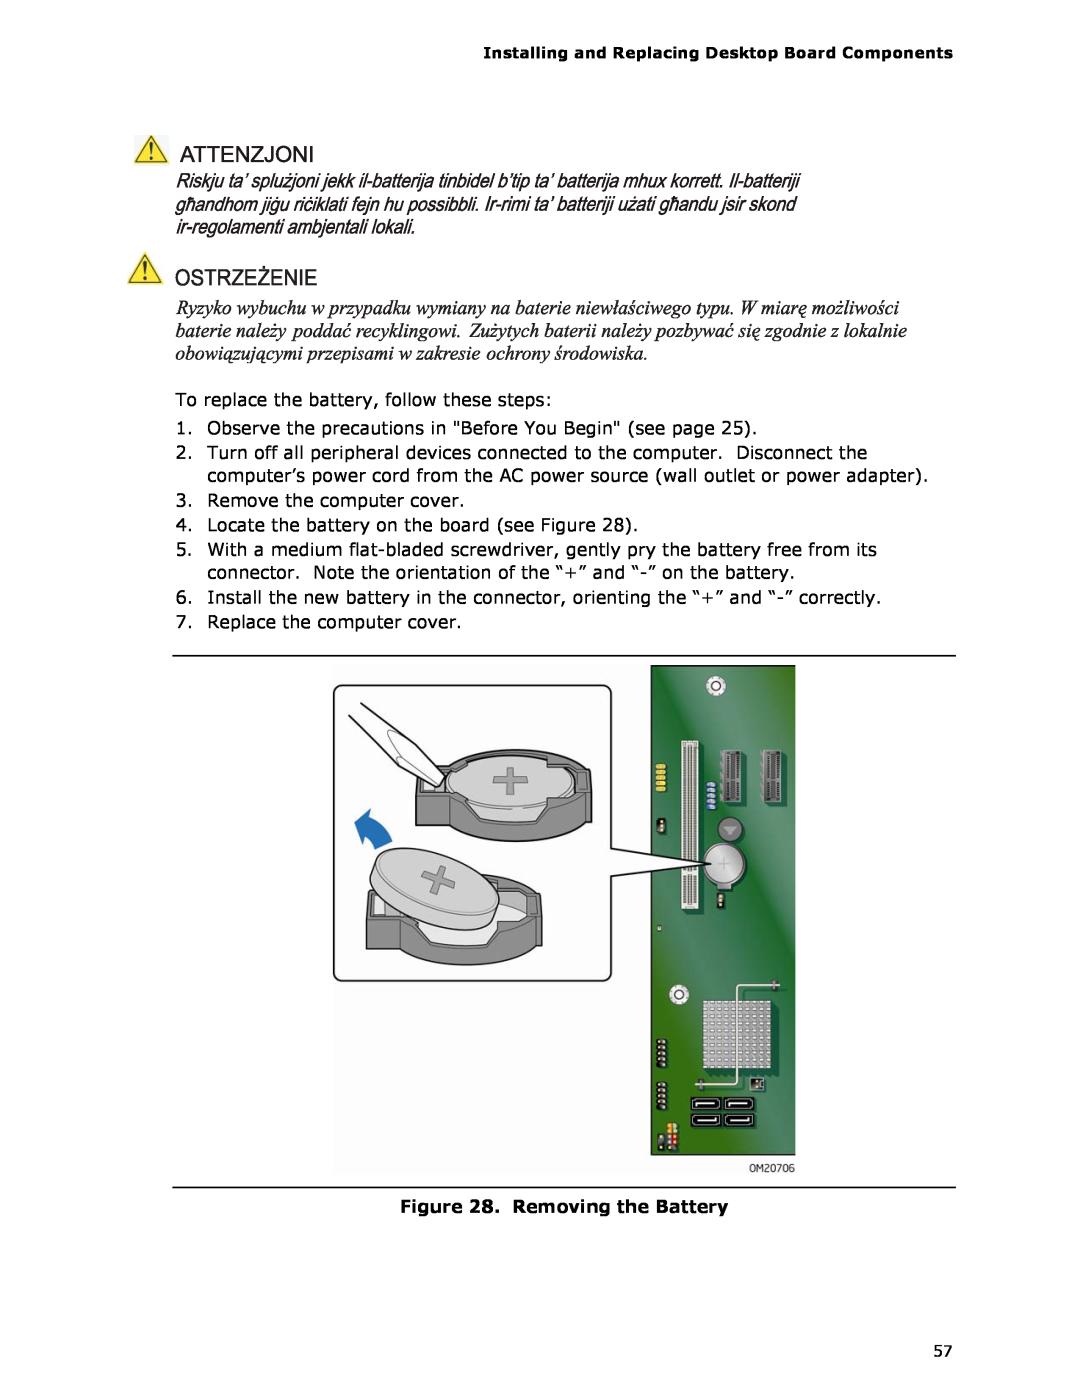 Intel DG35EC, Intel Desktop Board manual Removing the Battery 